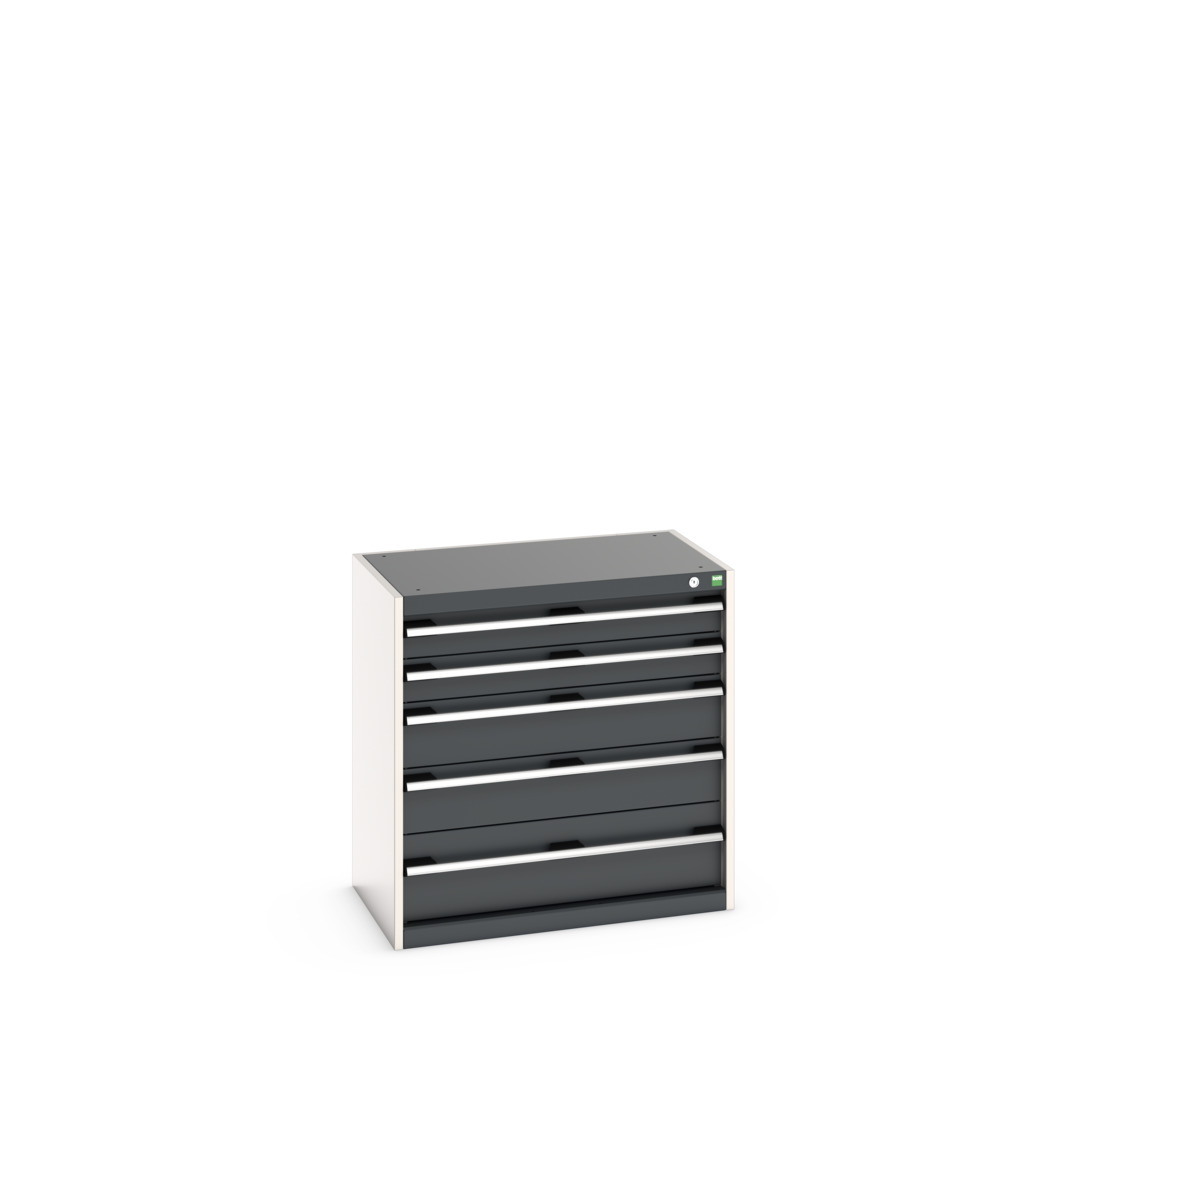 40012017. - cubio drawer cabinet